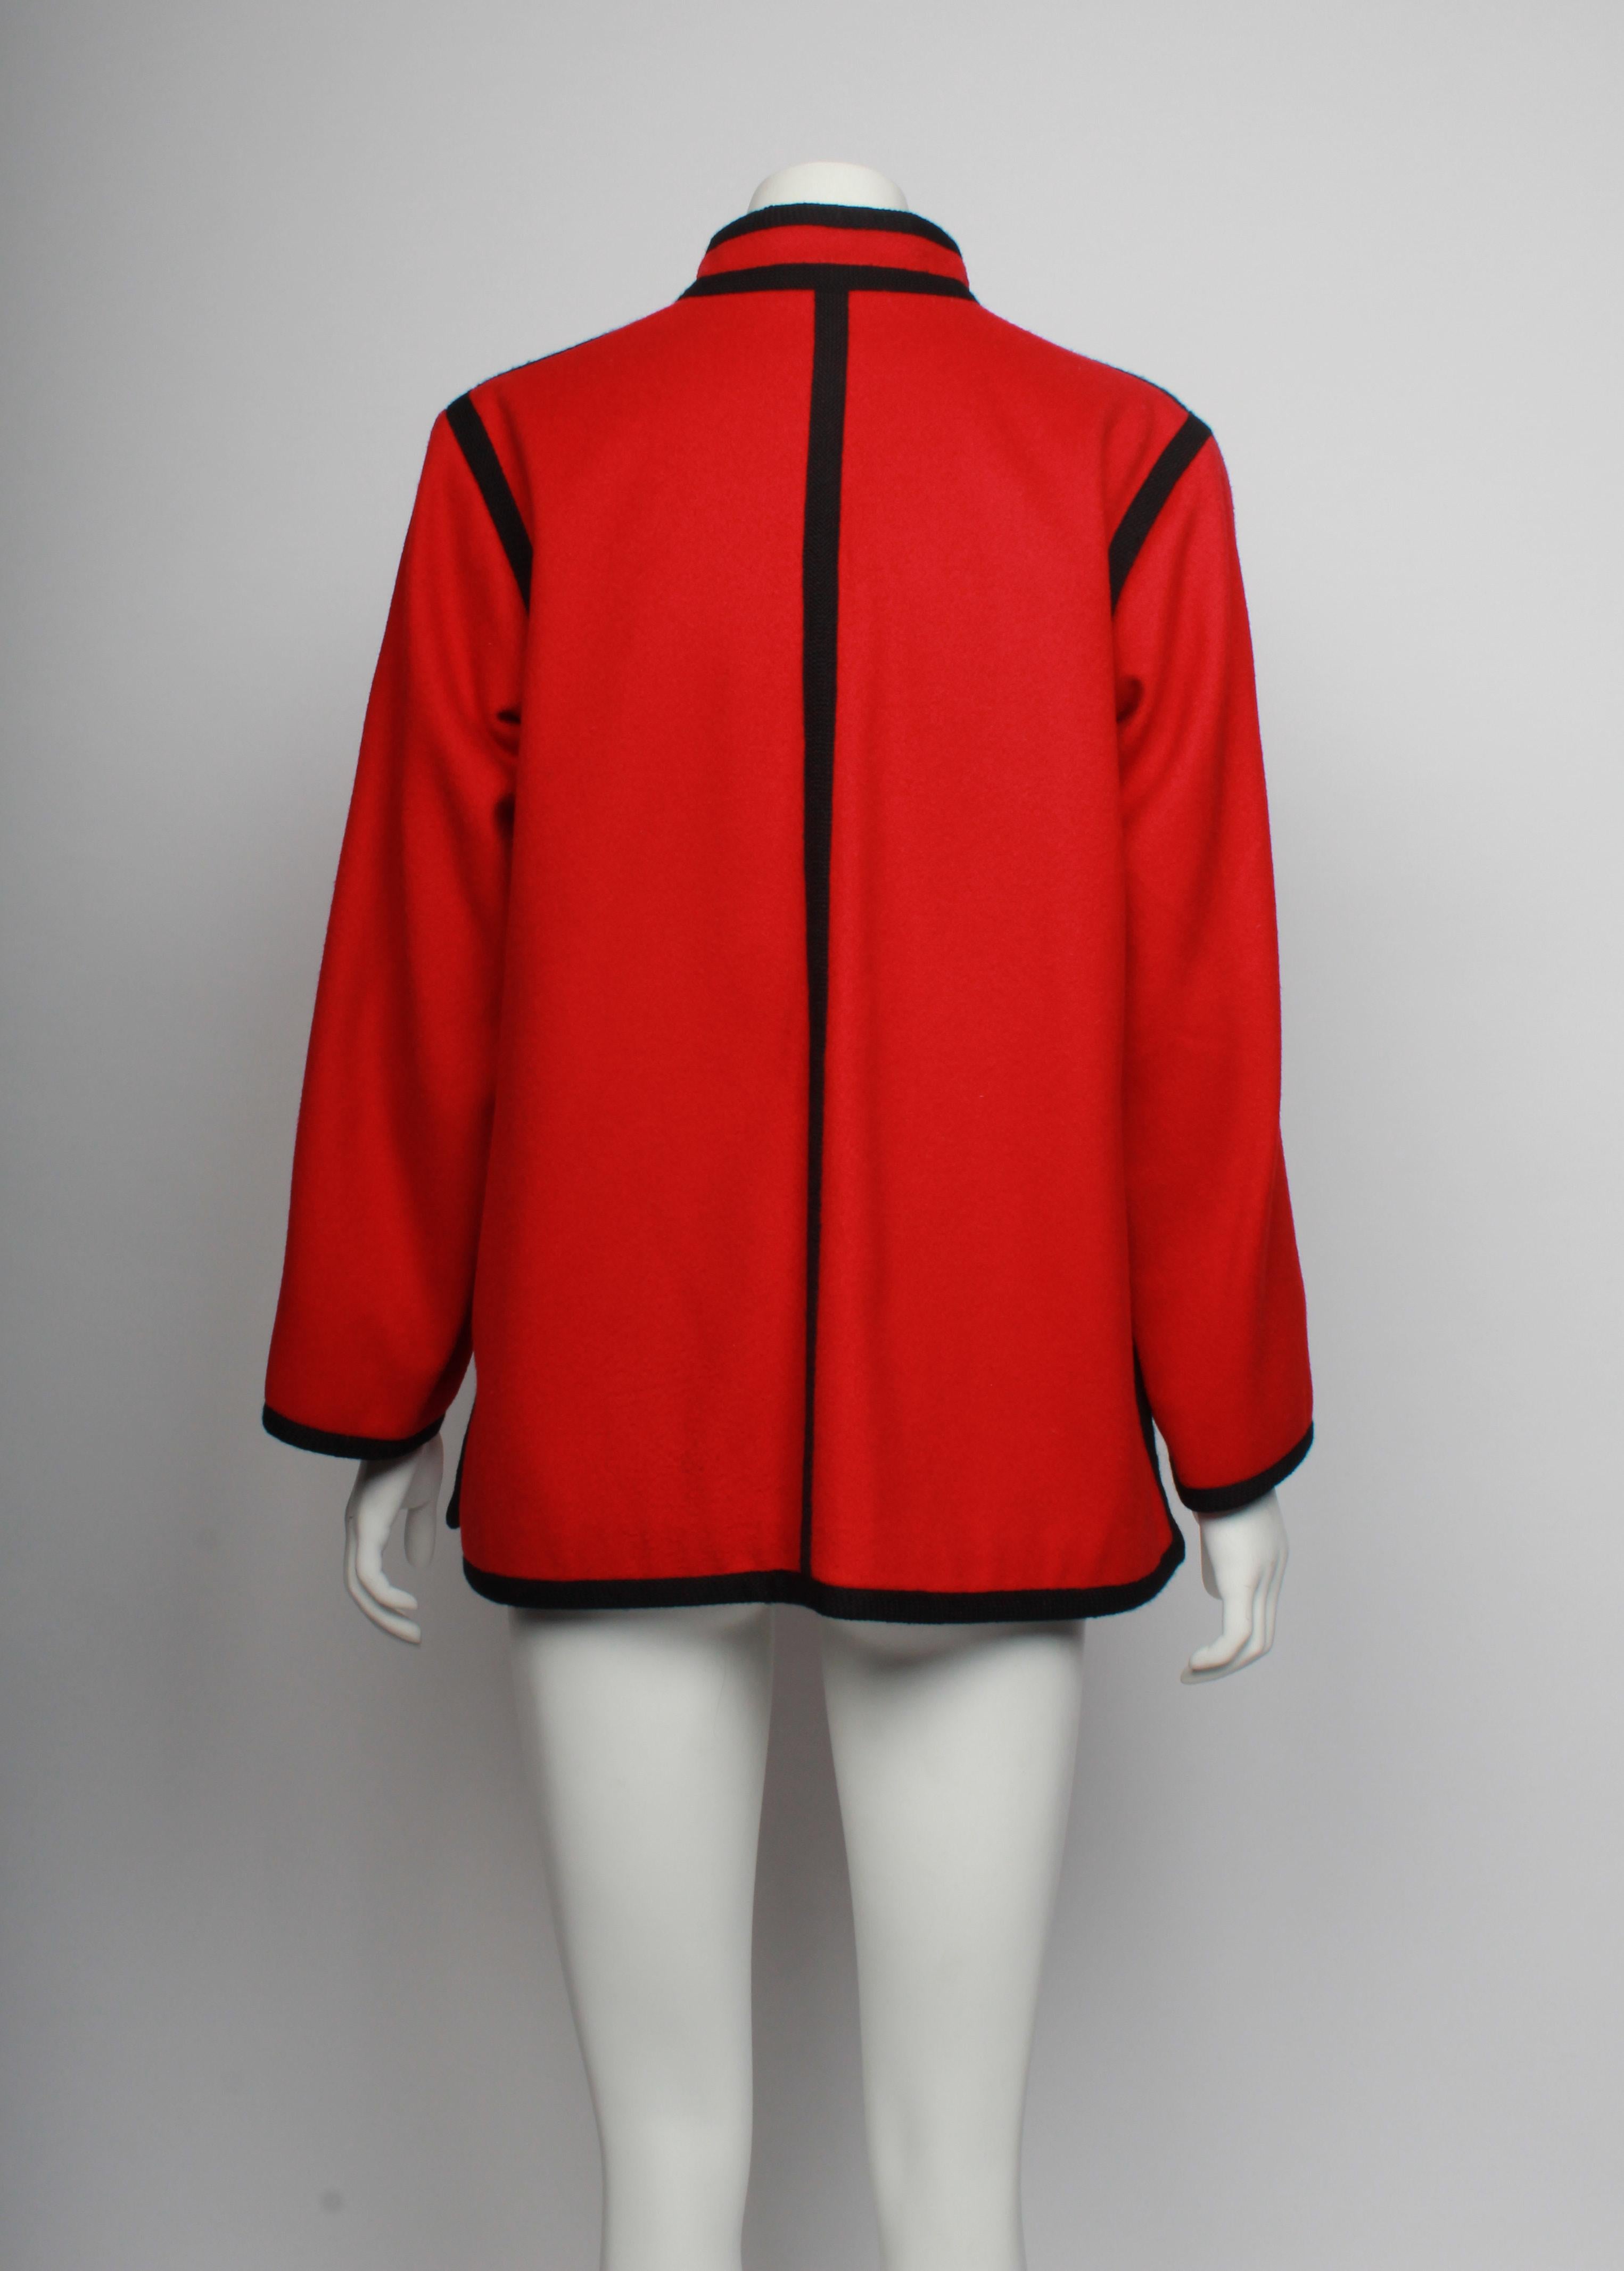 Saint Laurent Mandarin Collar Jacket In Good Condition For Sale In Melbourne, Victoria